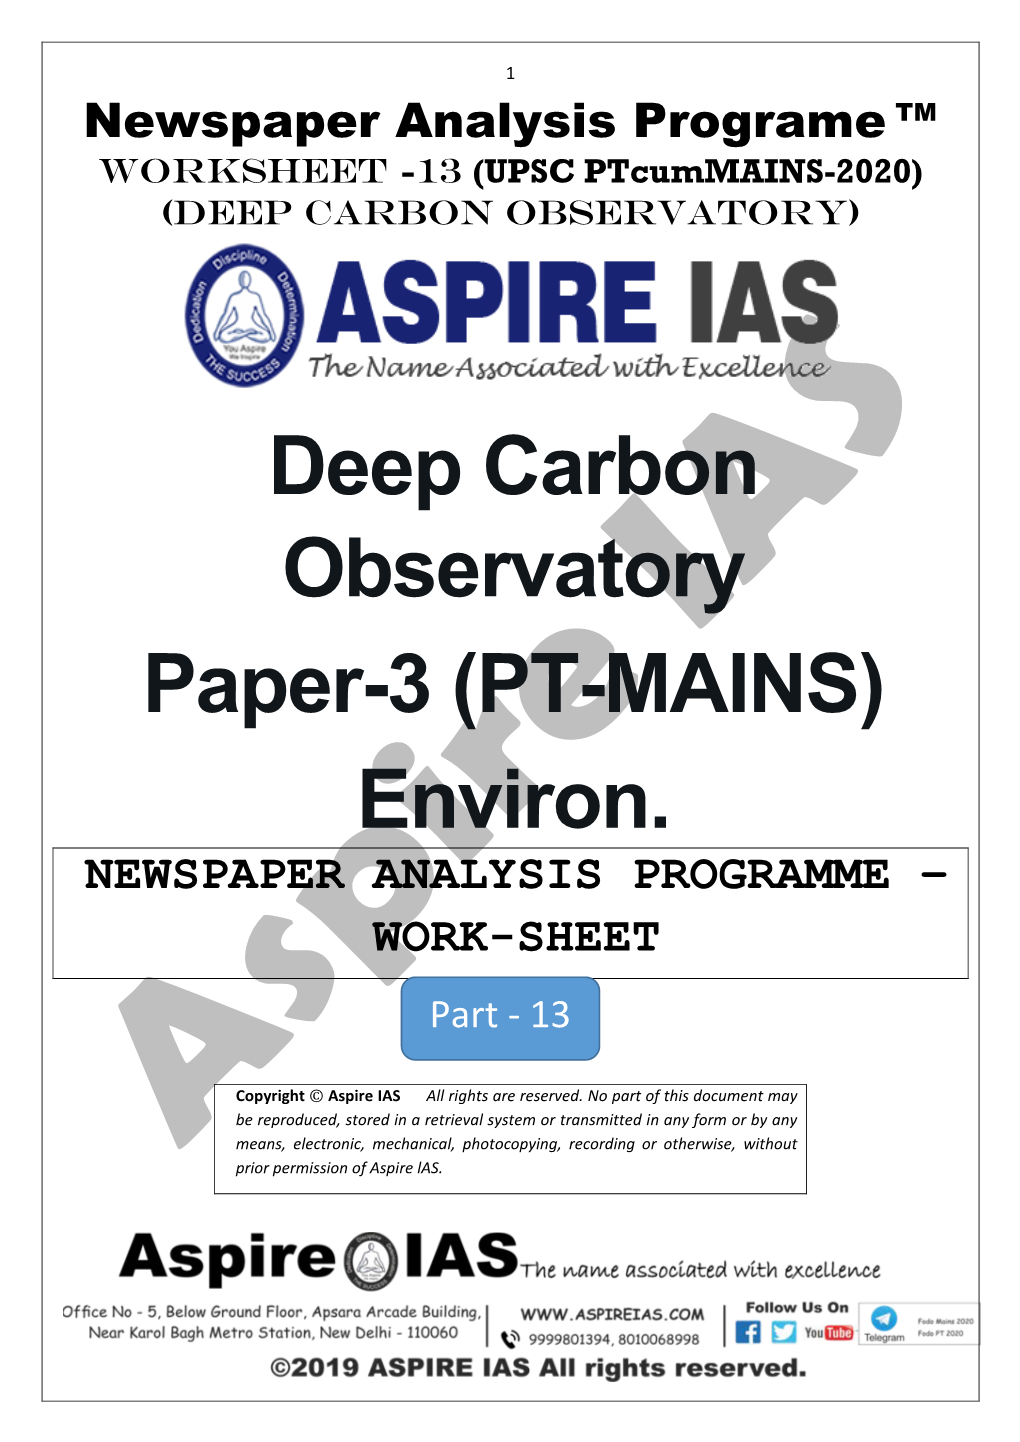 Deep Carbon Observatory Paper-3